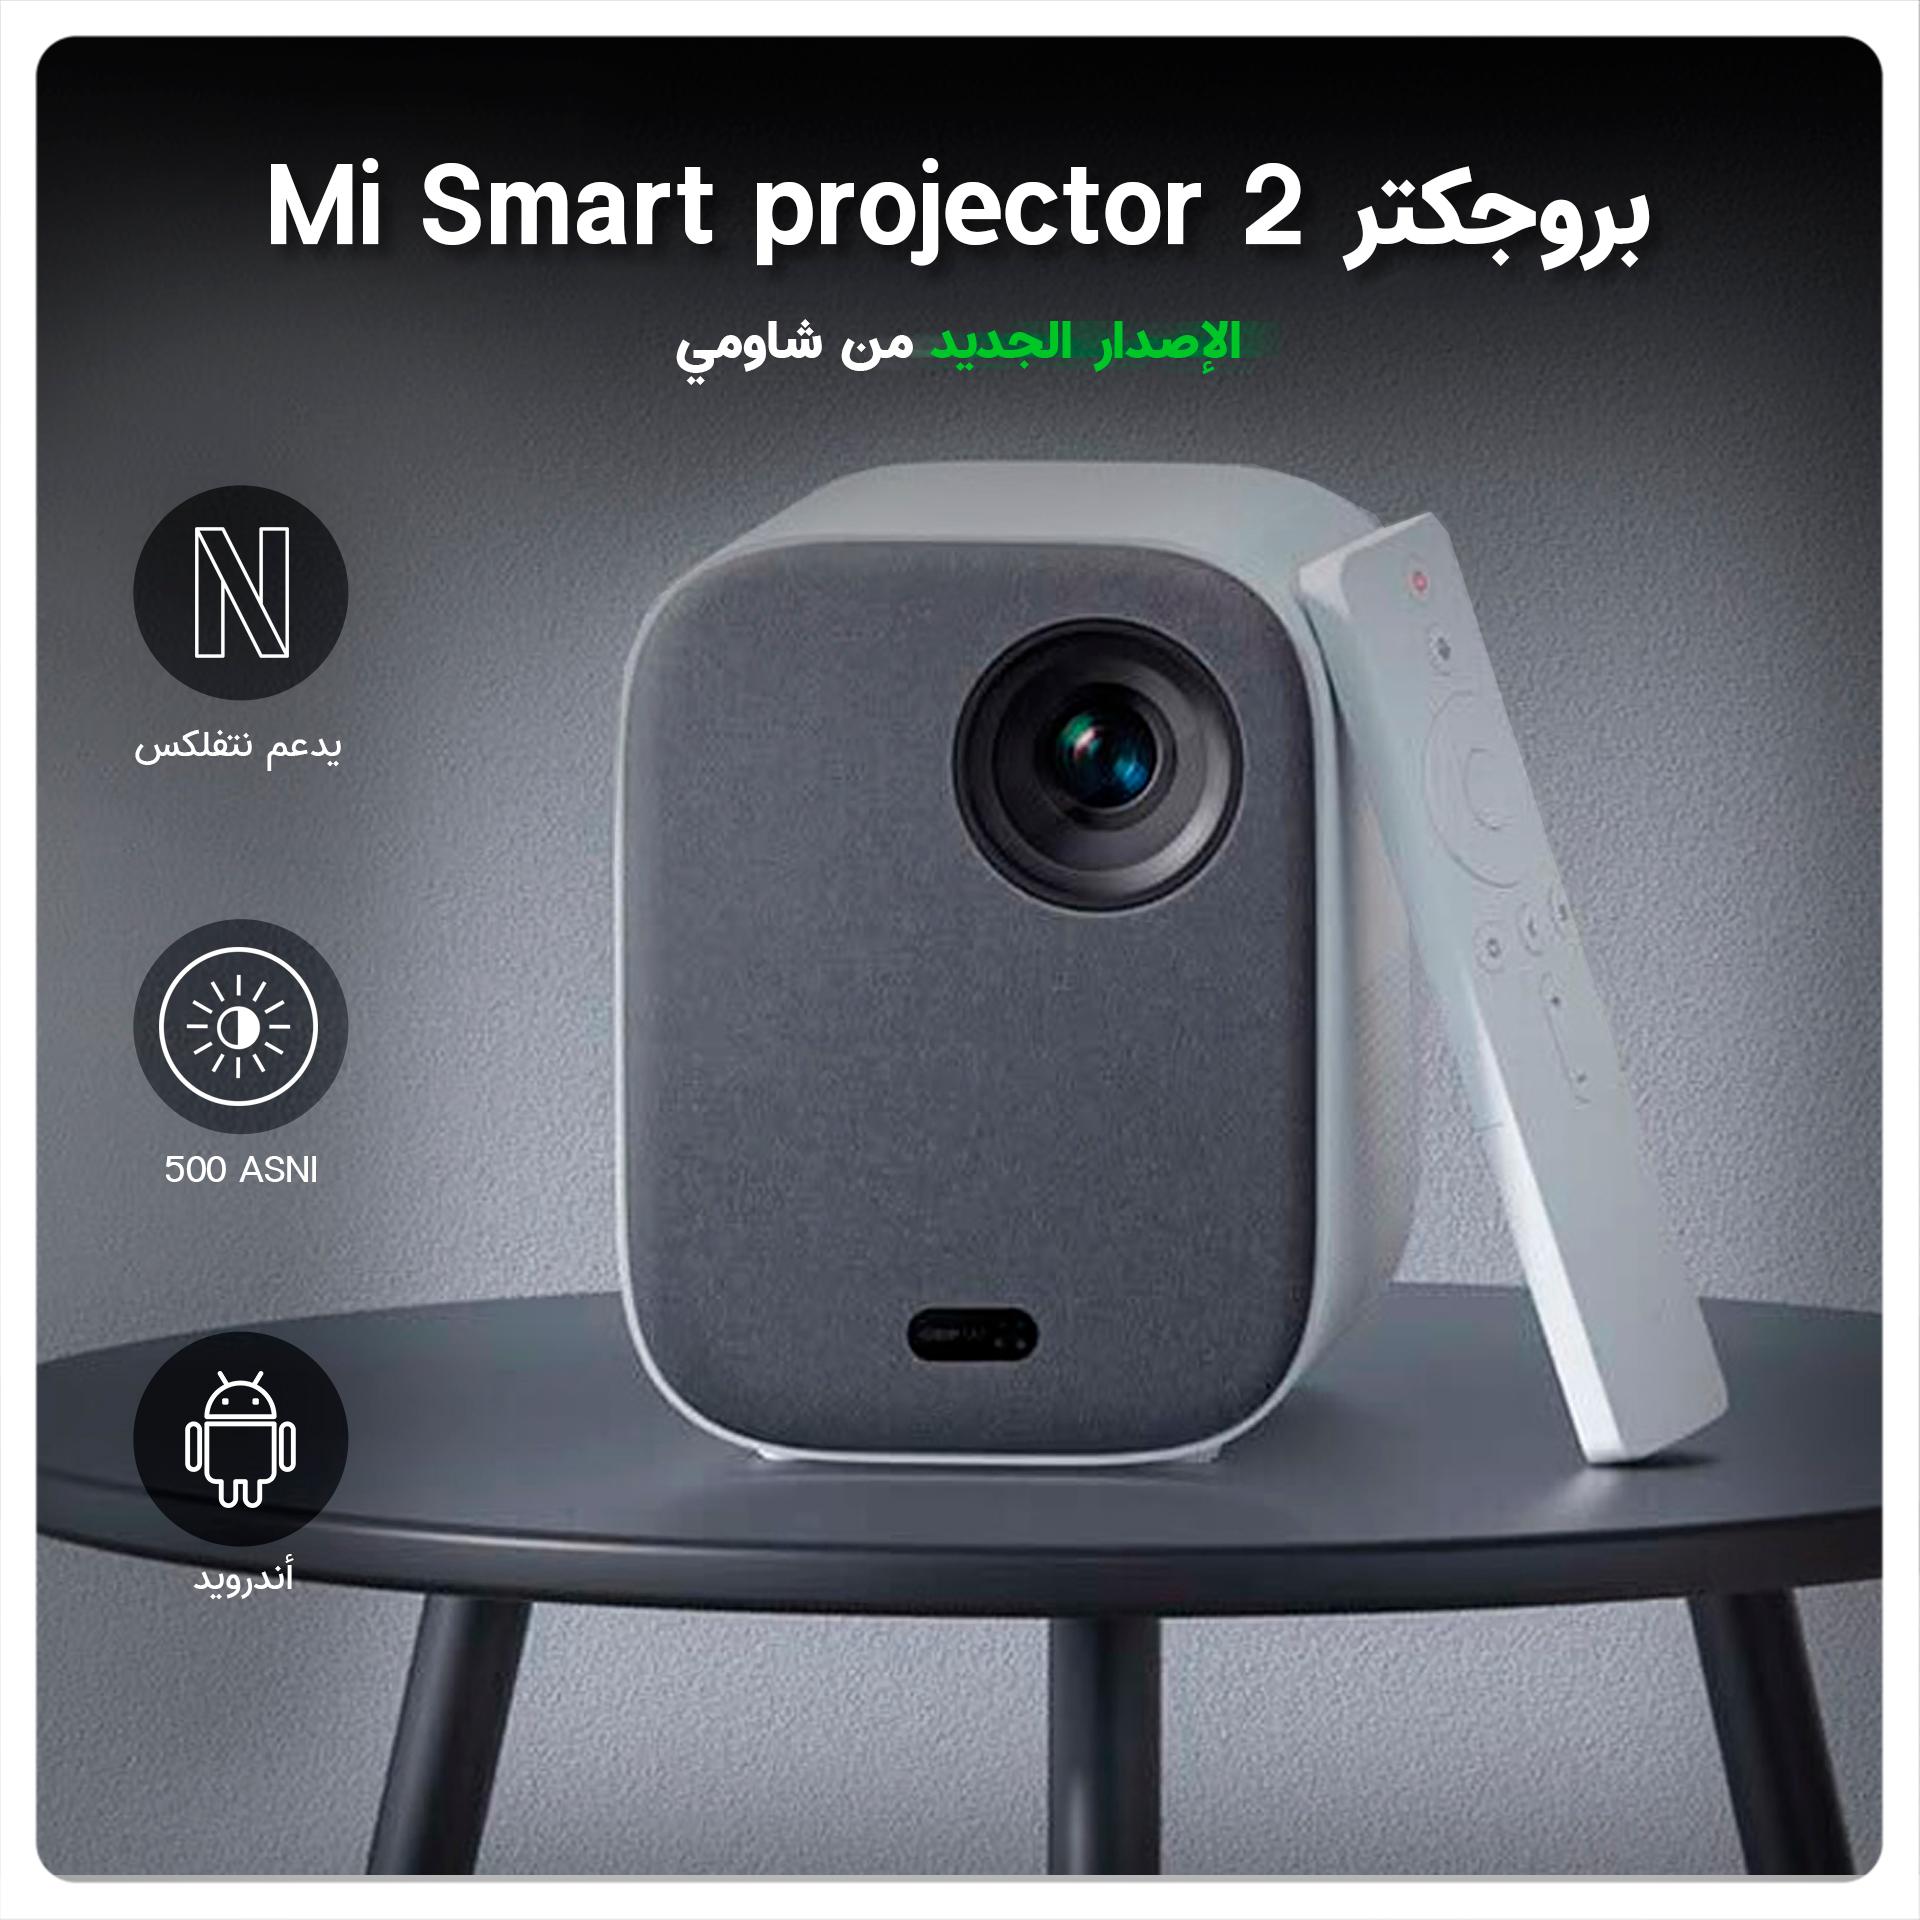 بروجكتر شاومي Mi Smart projector 2